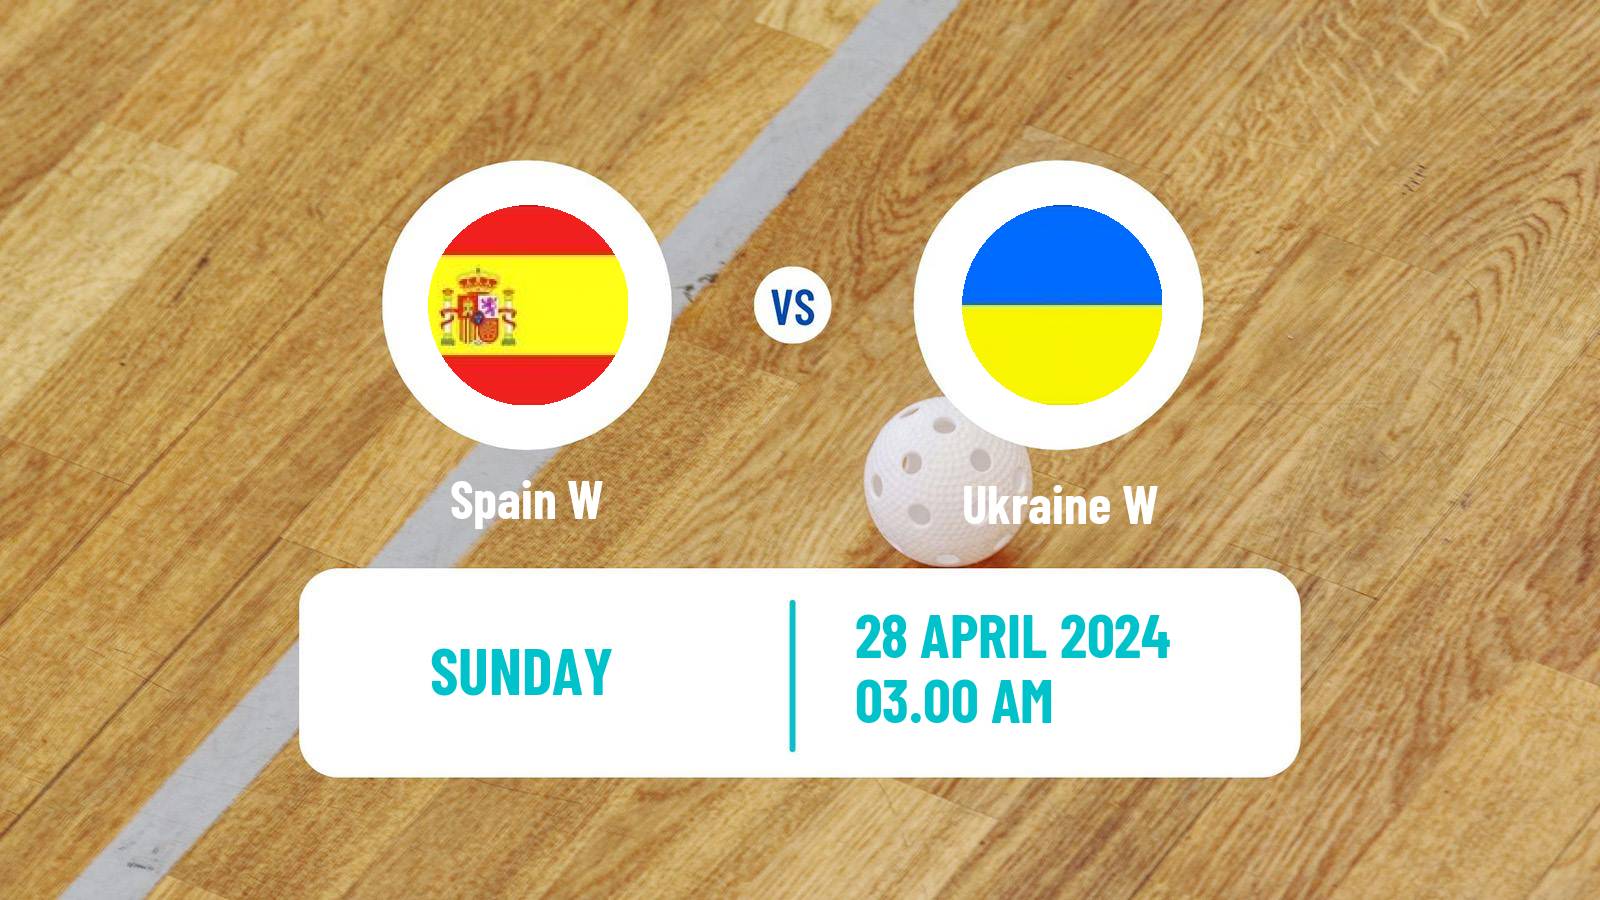 Floorball Friendly International Floorball Women Spain W - Ukraine W